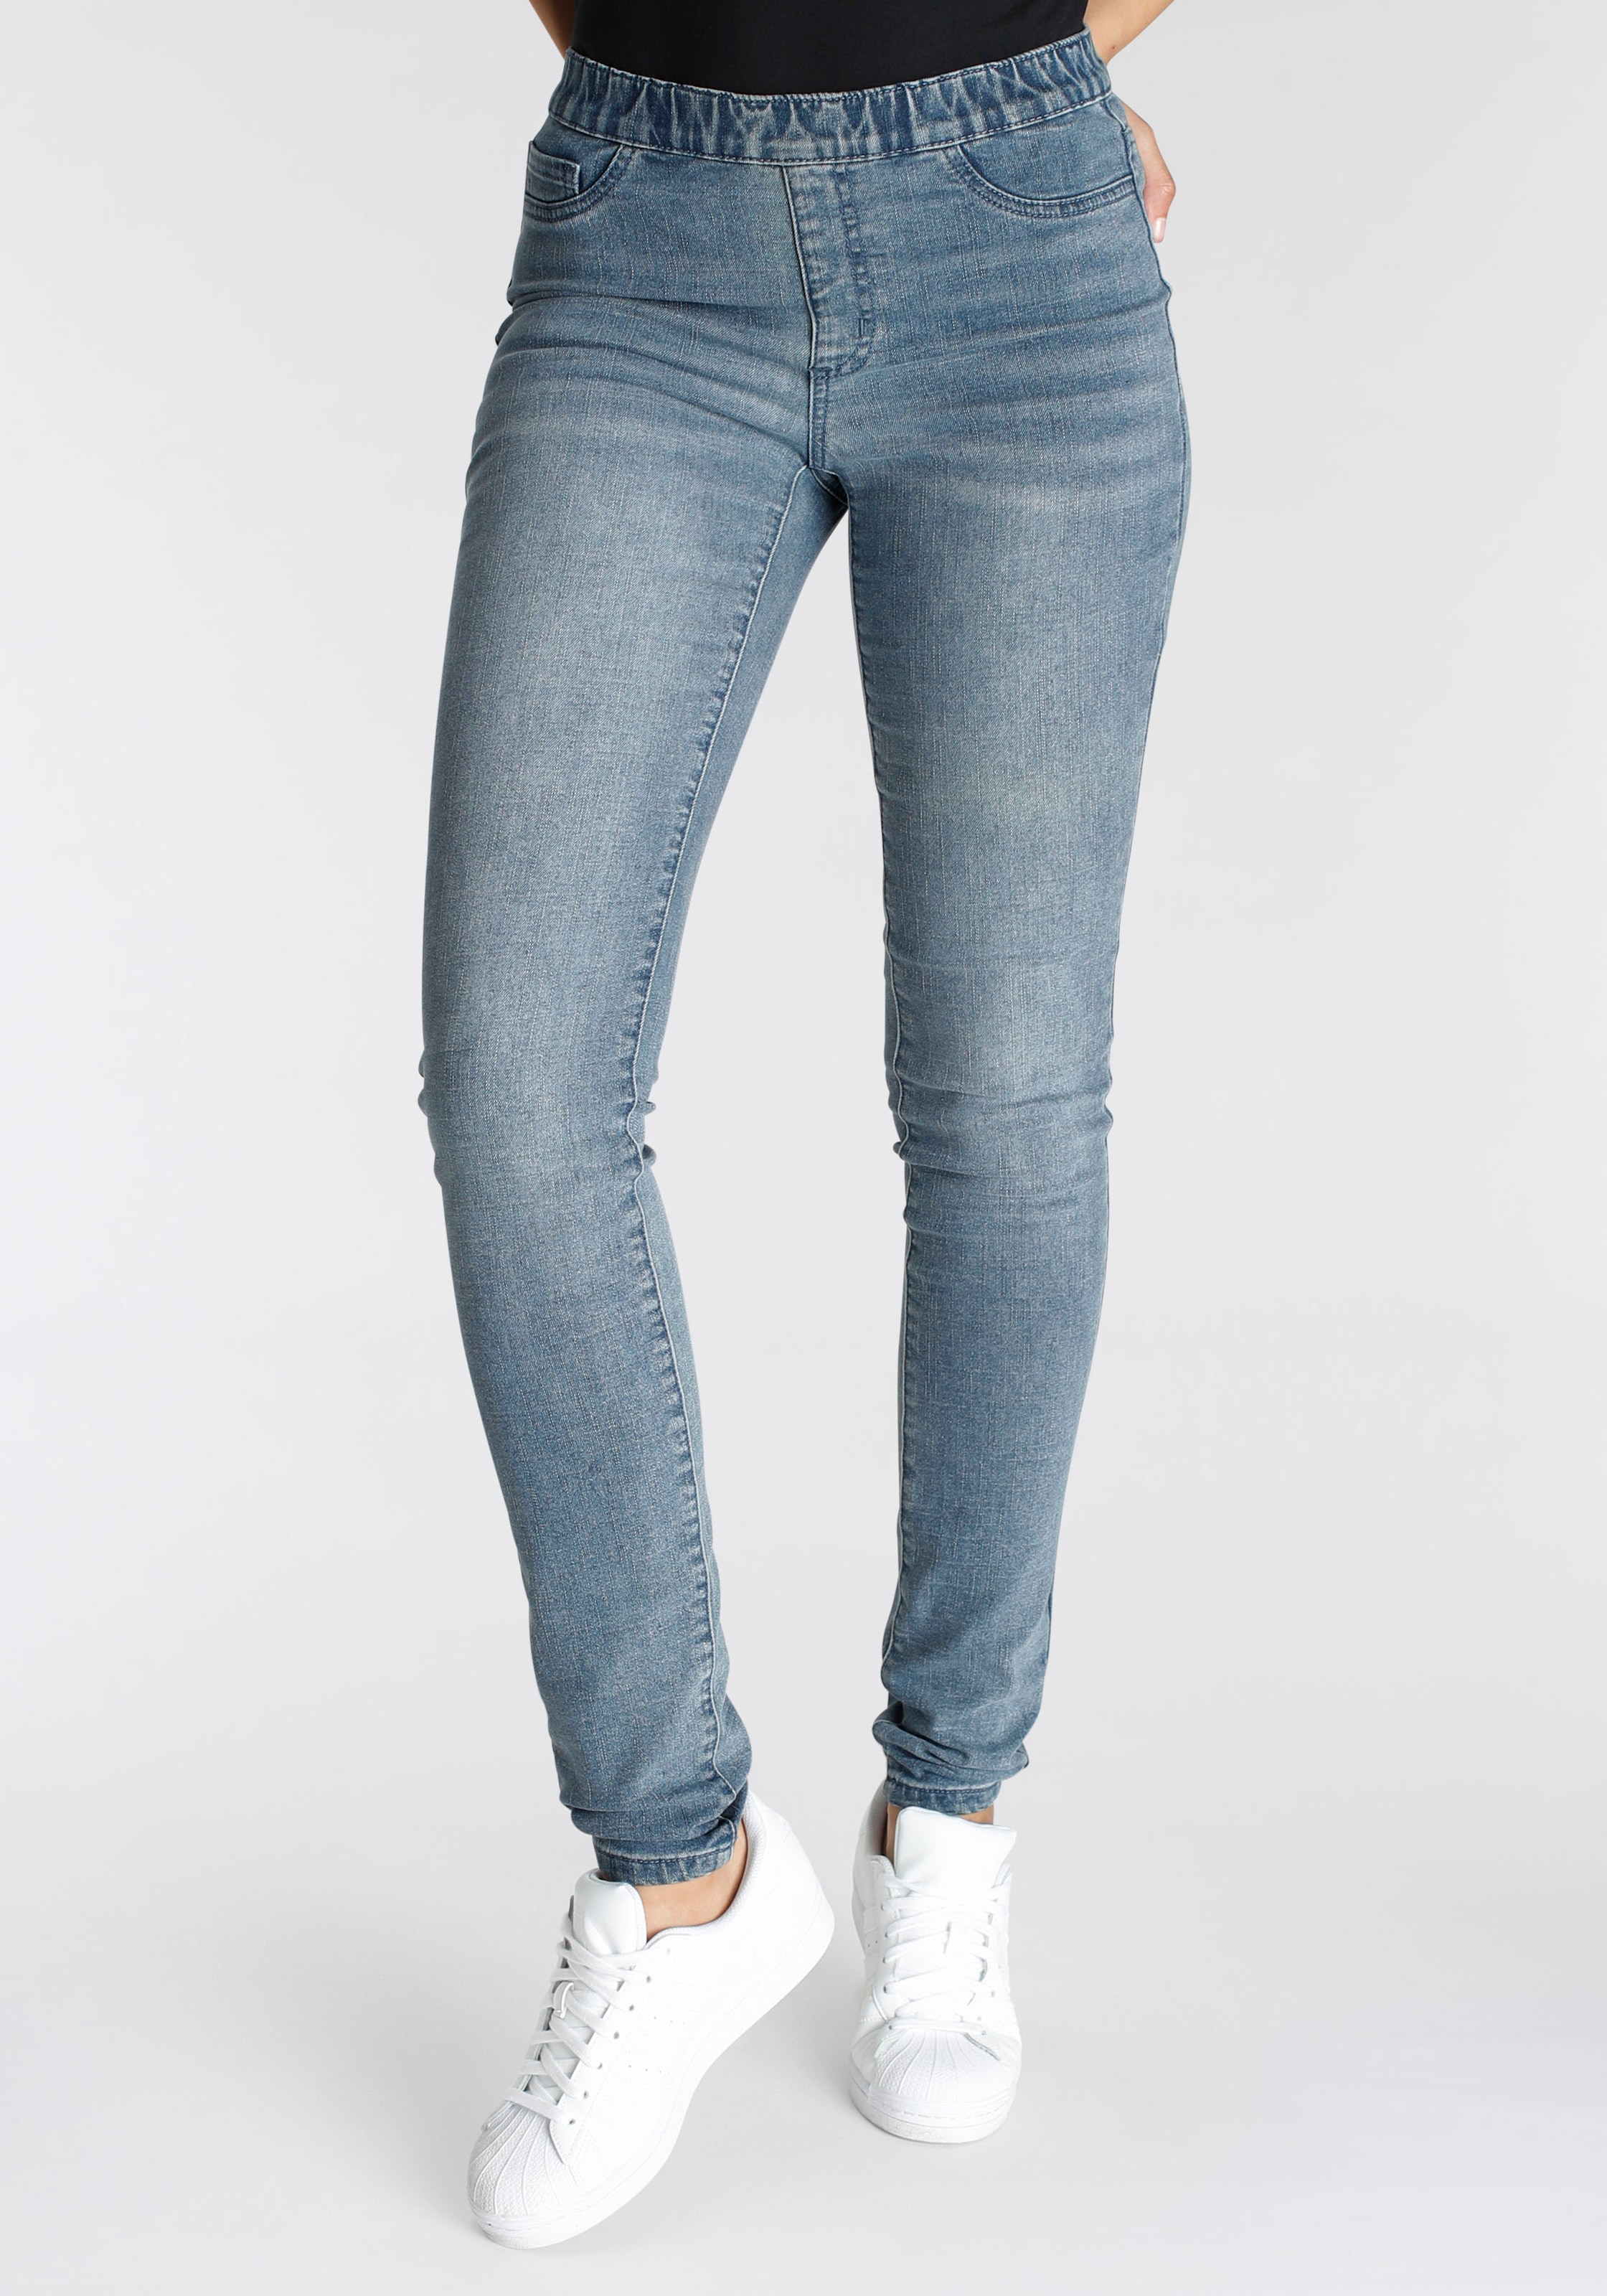 Arizona Jeans Damen online bestellen ▻